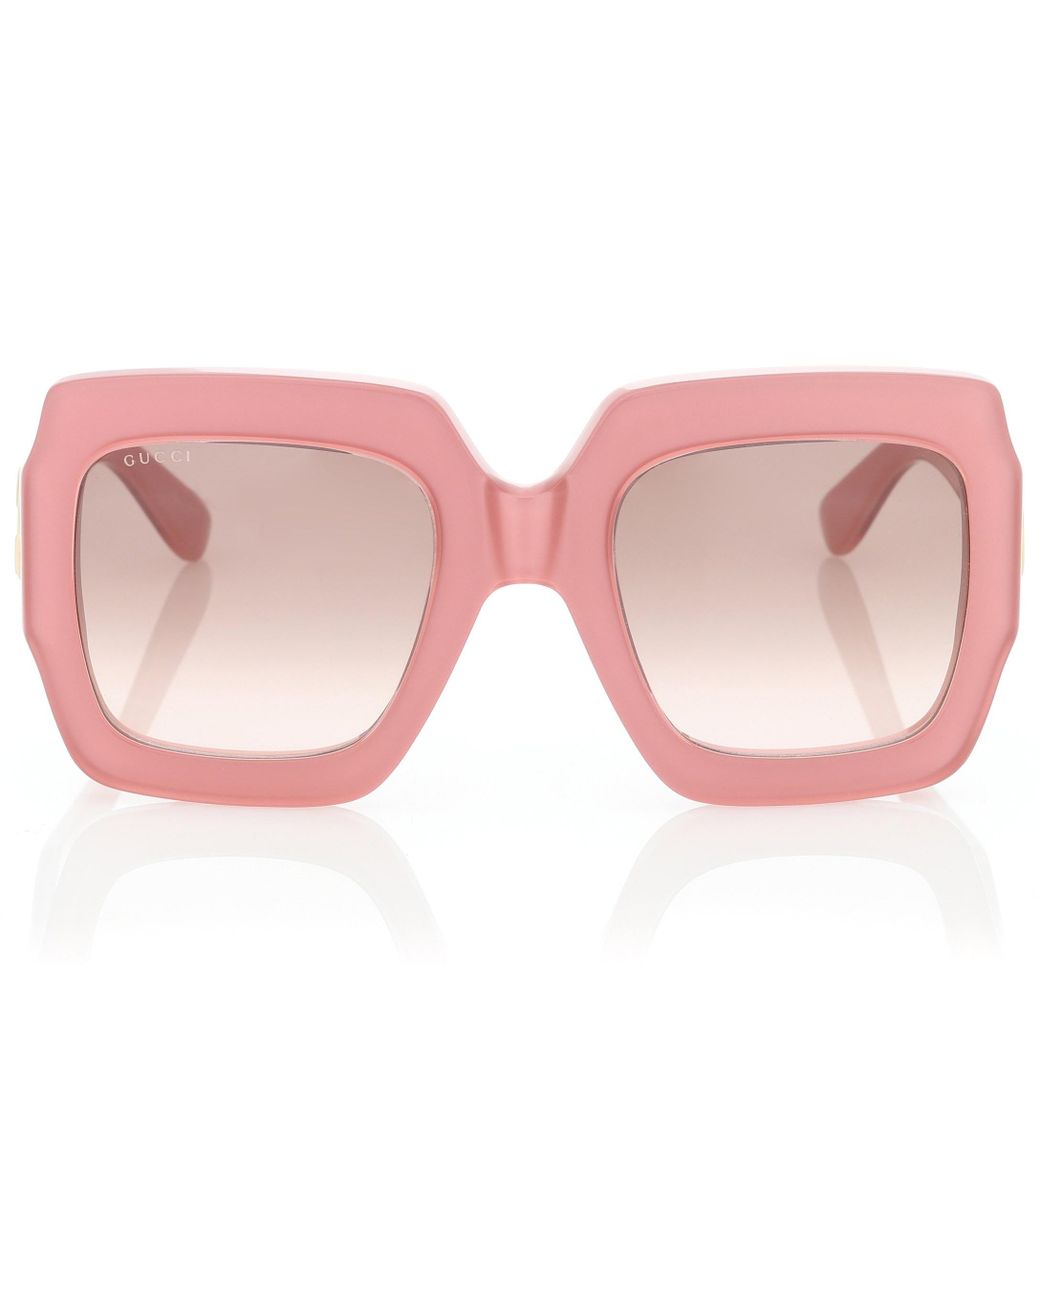 Gucci Square Acetate Sunglasses in Pink | Lyst